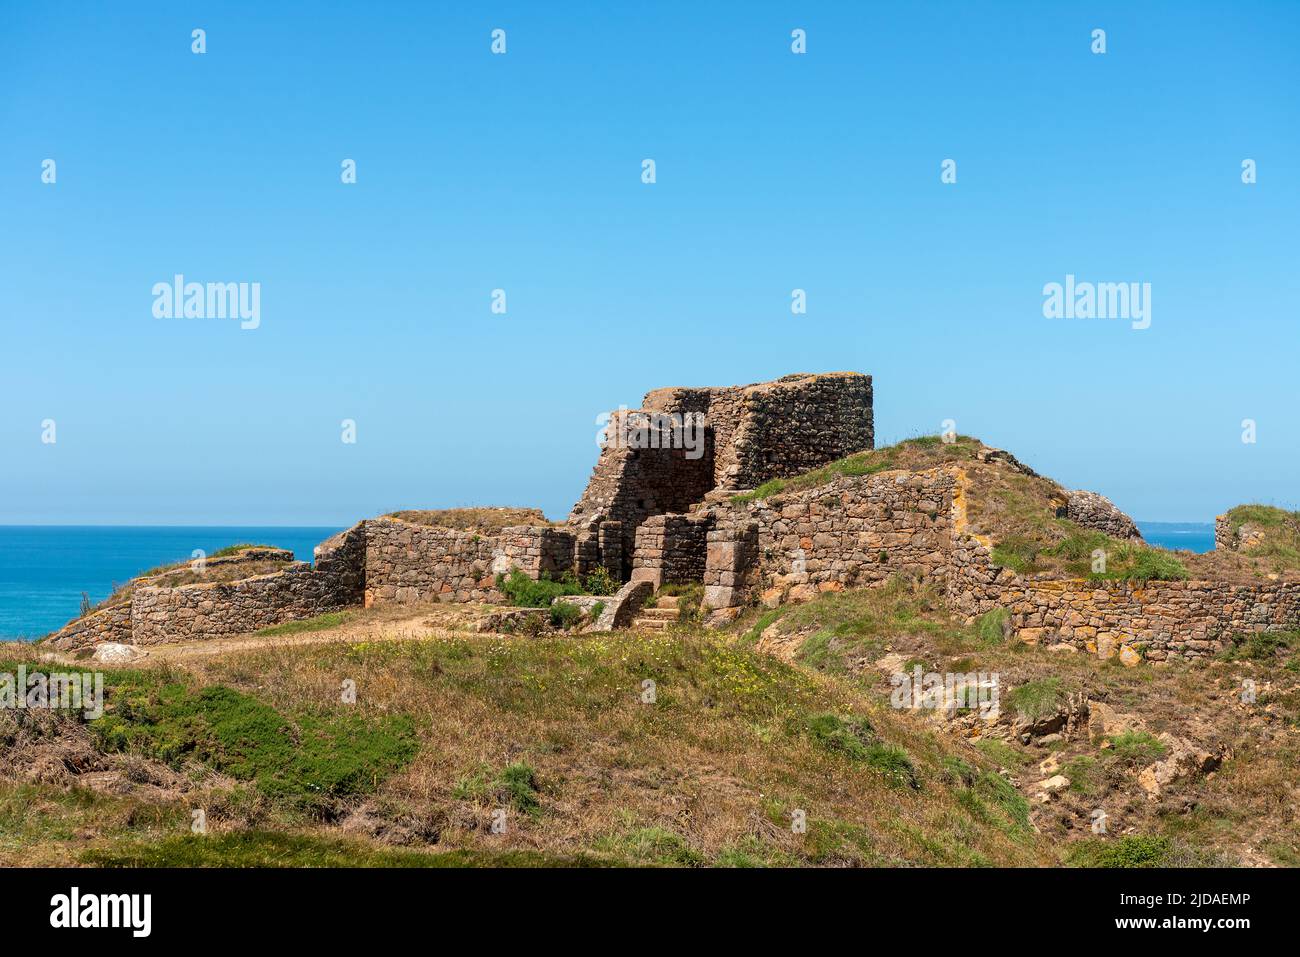 Fliquet Castle in Fliquet Bay, Jersey Stock Photo - Alamy